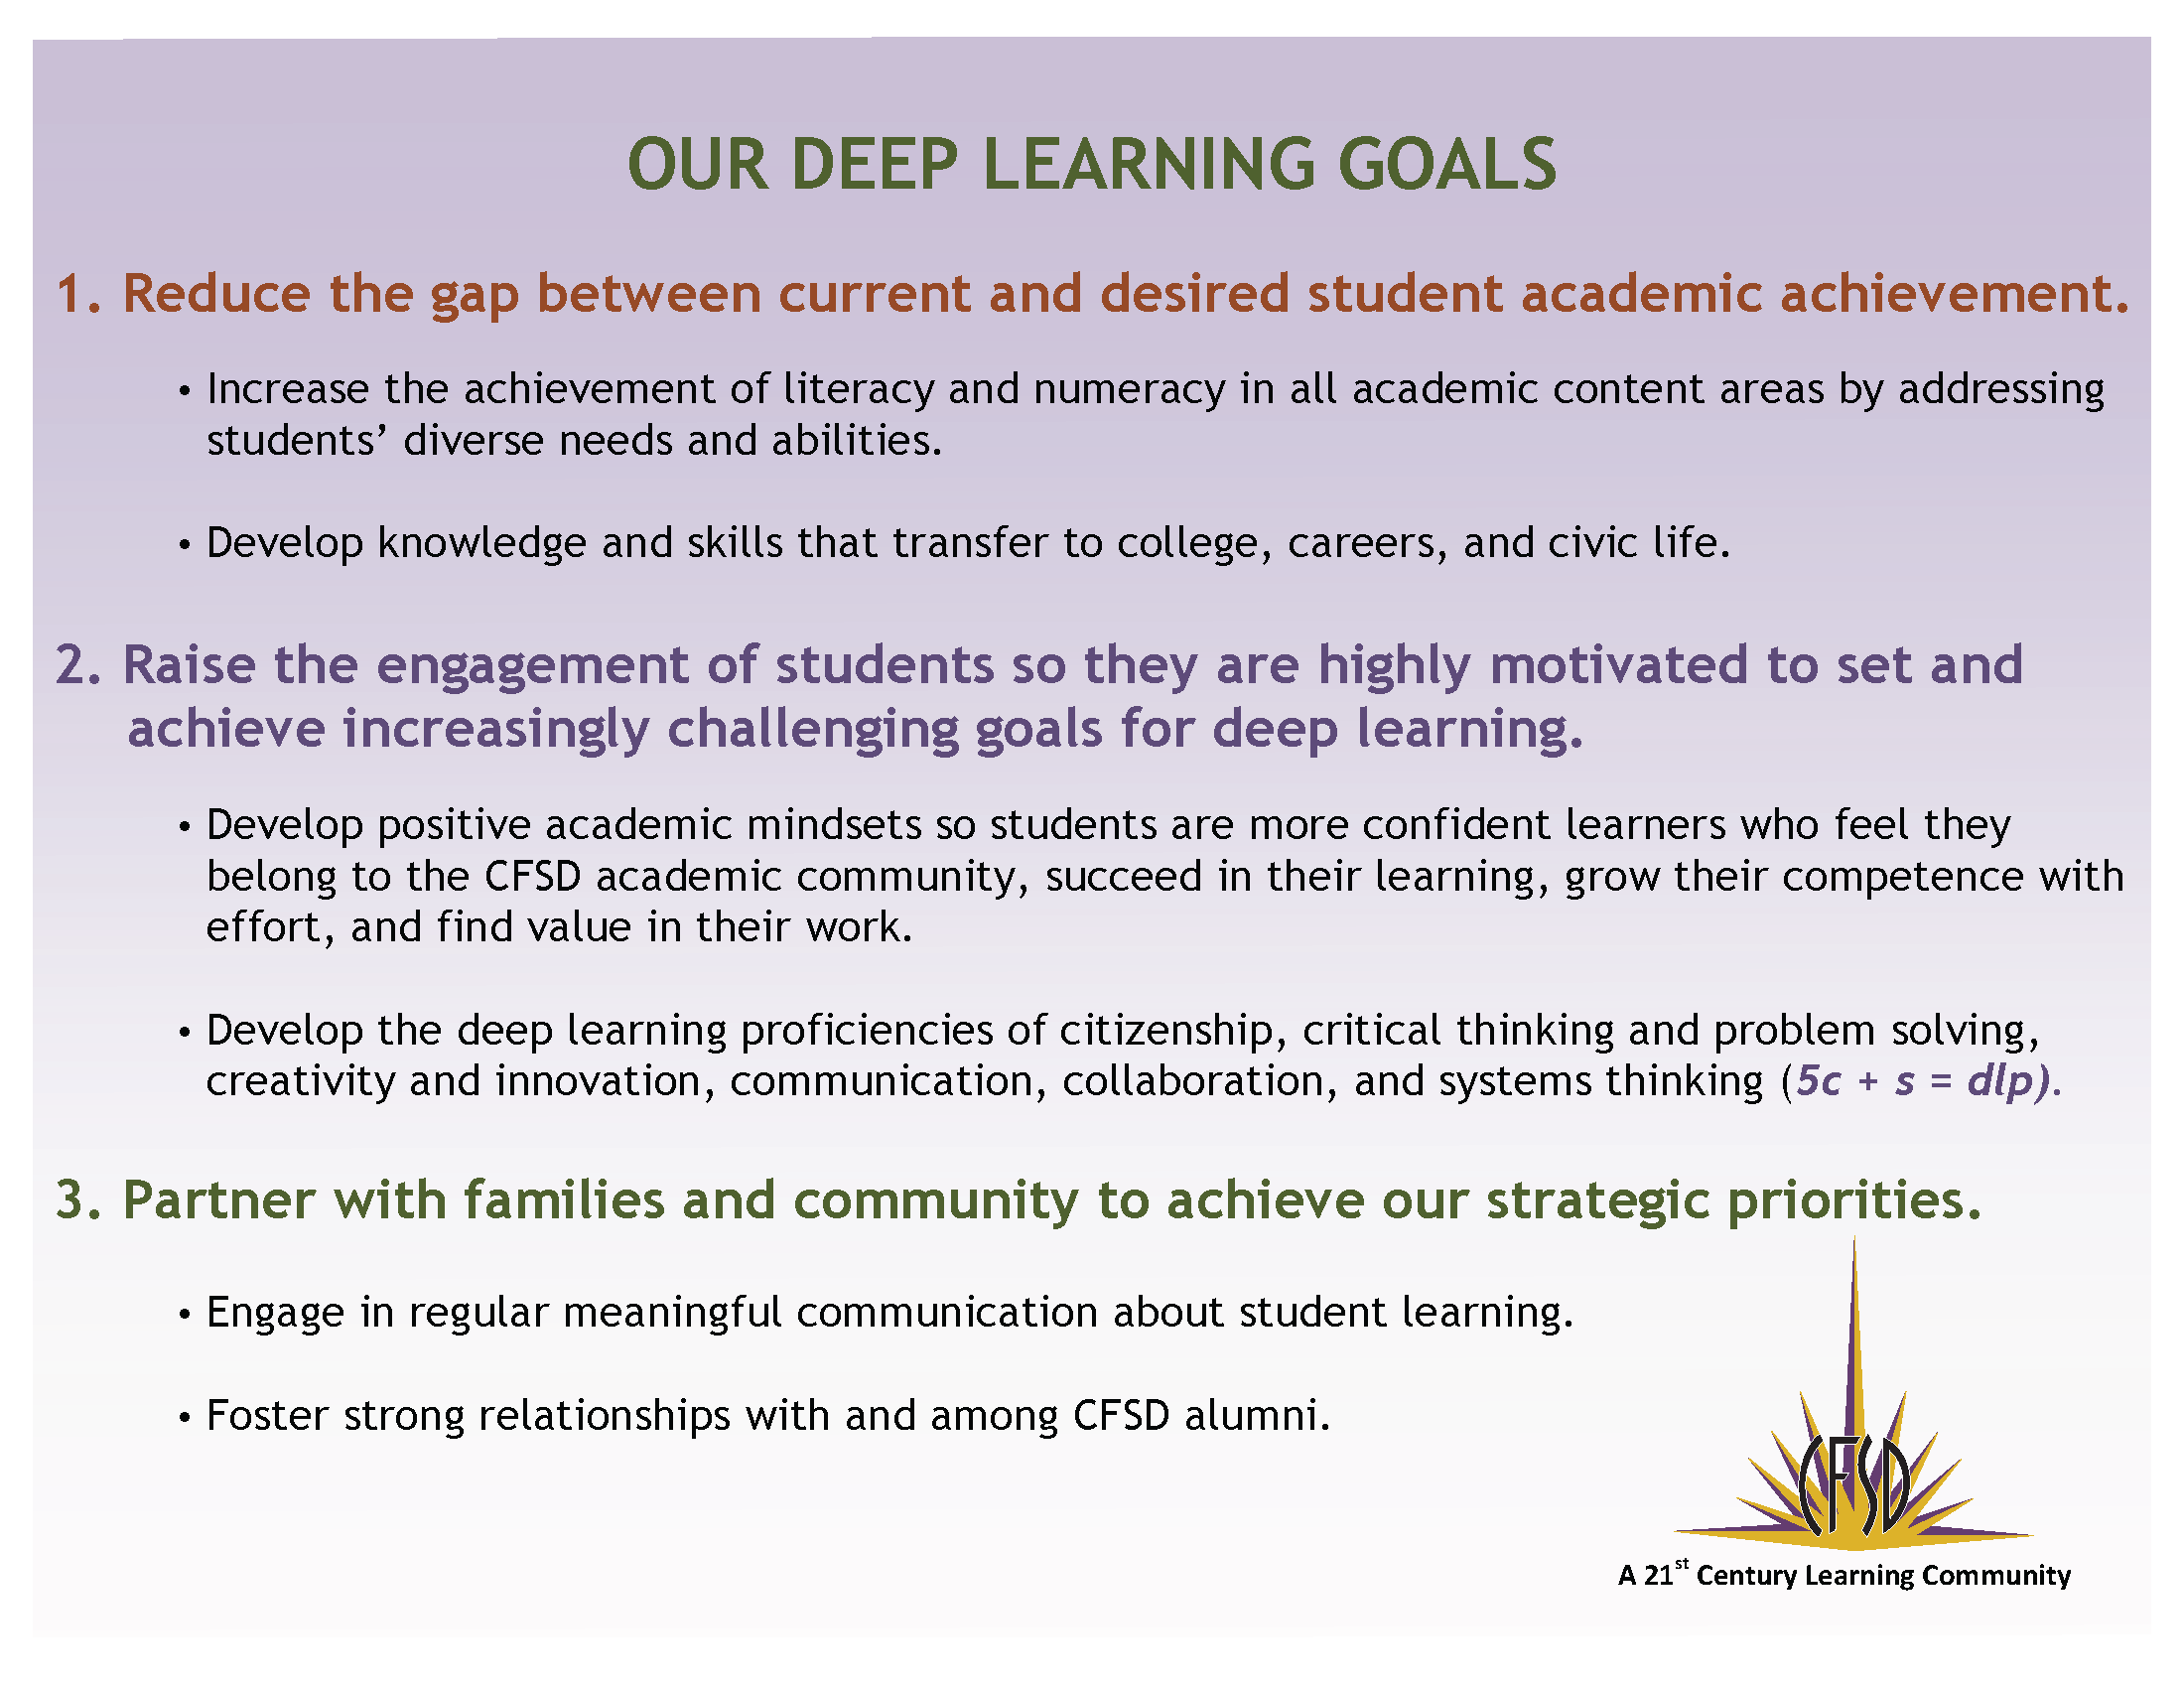 Deep Learning Goals